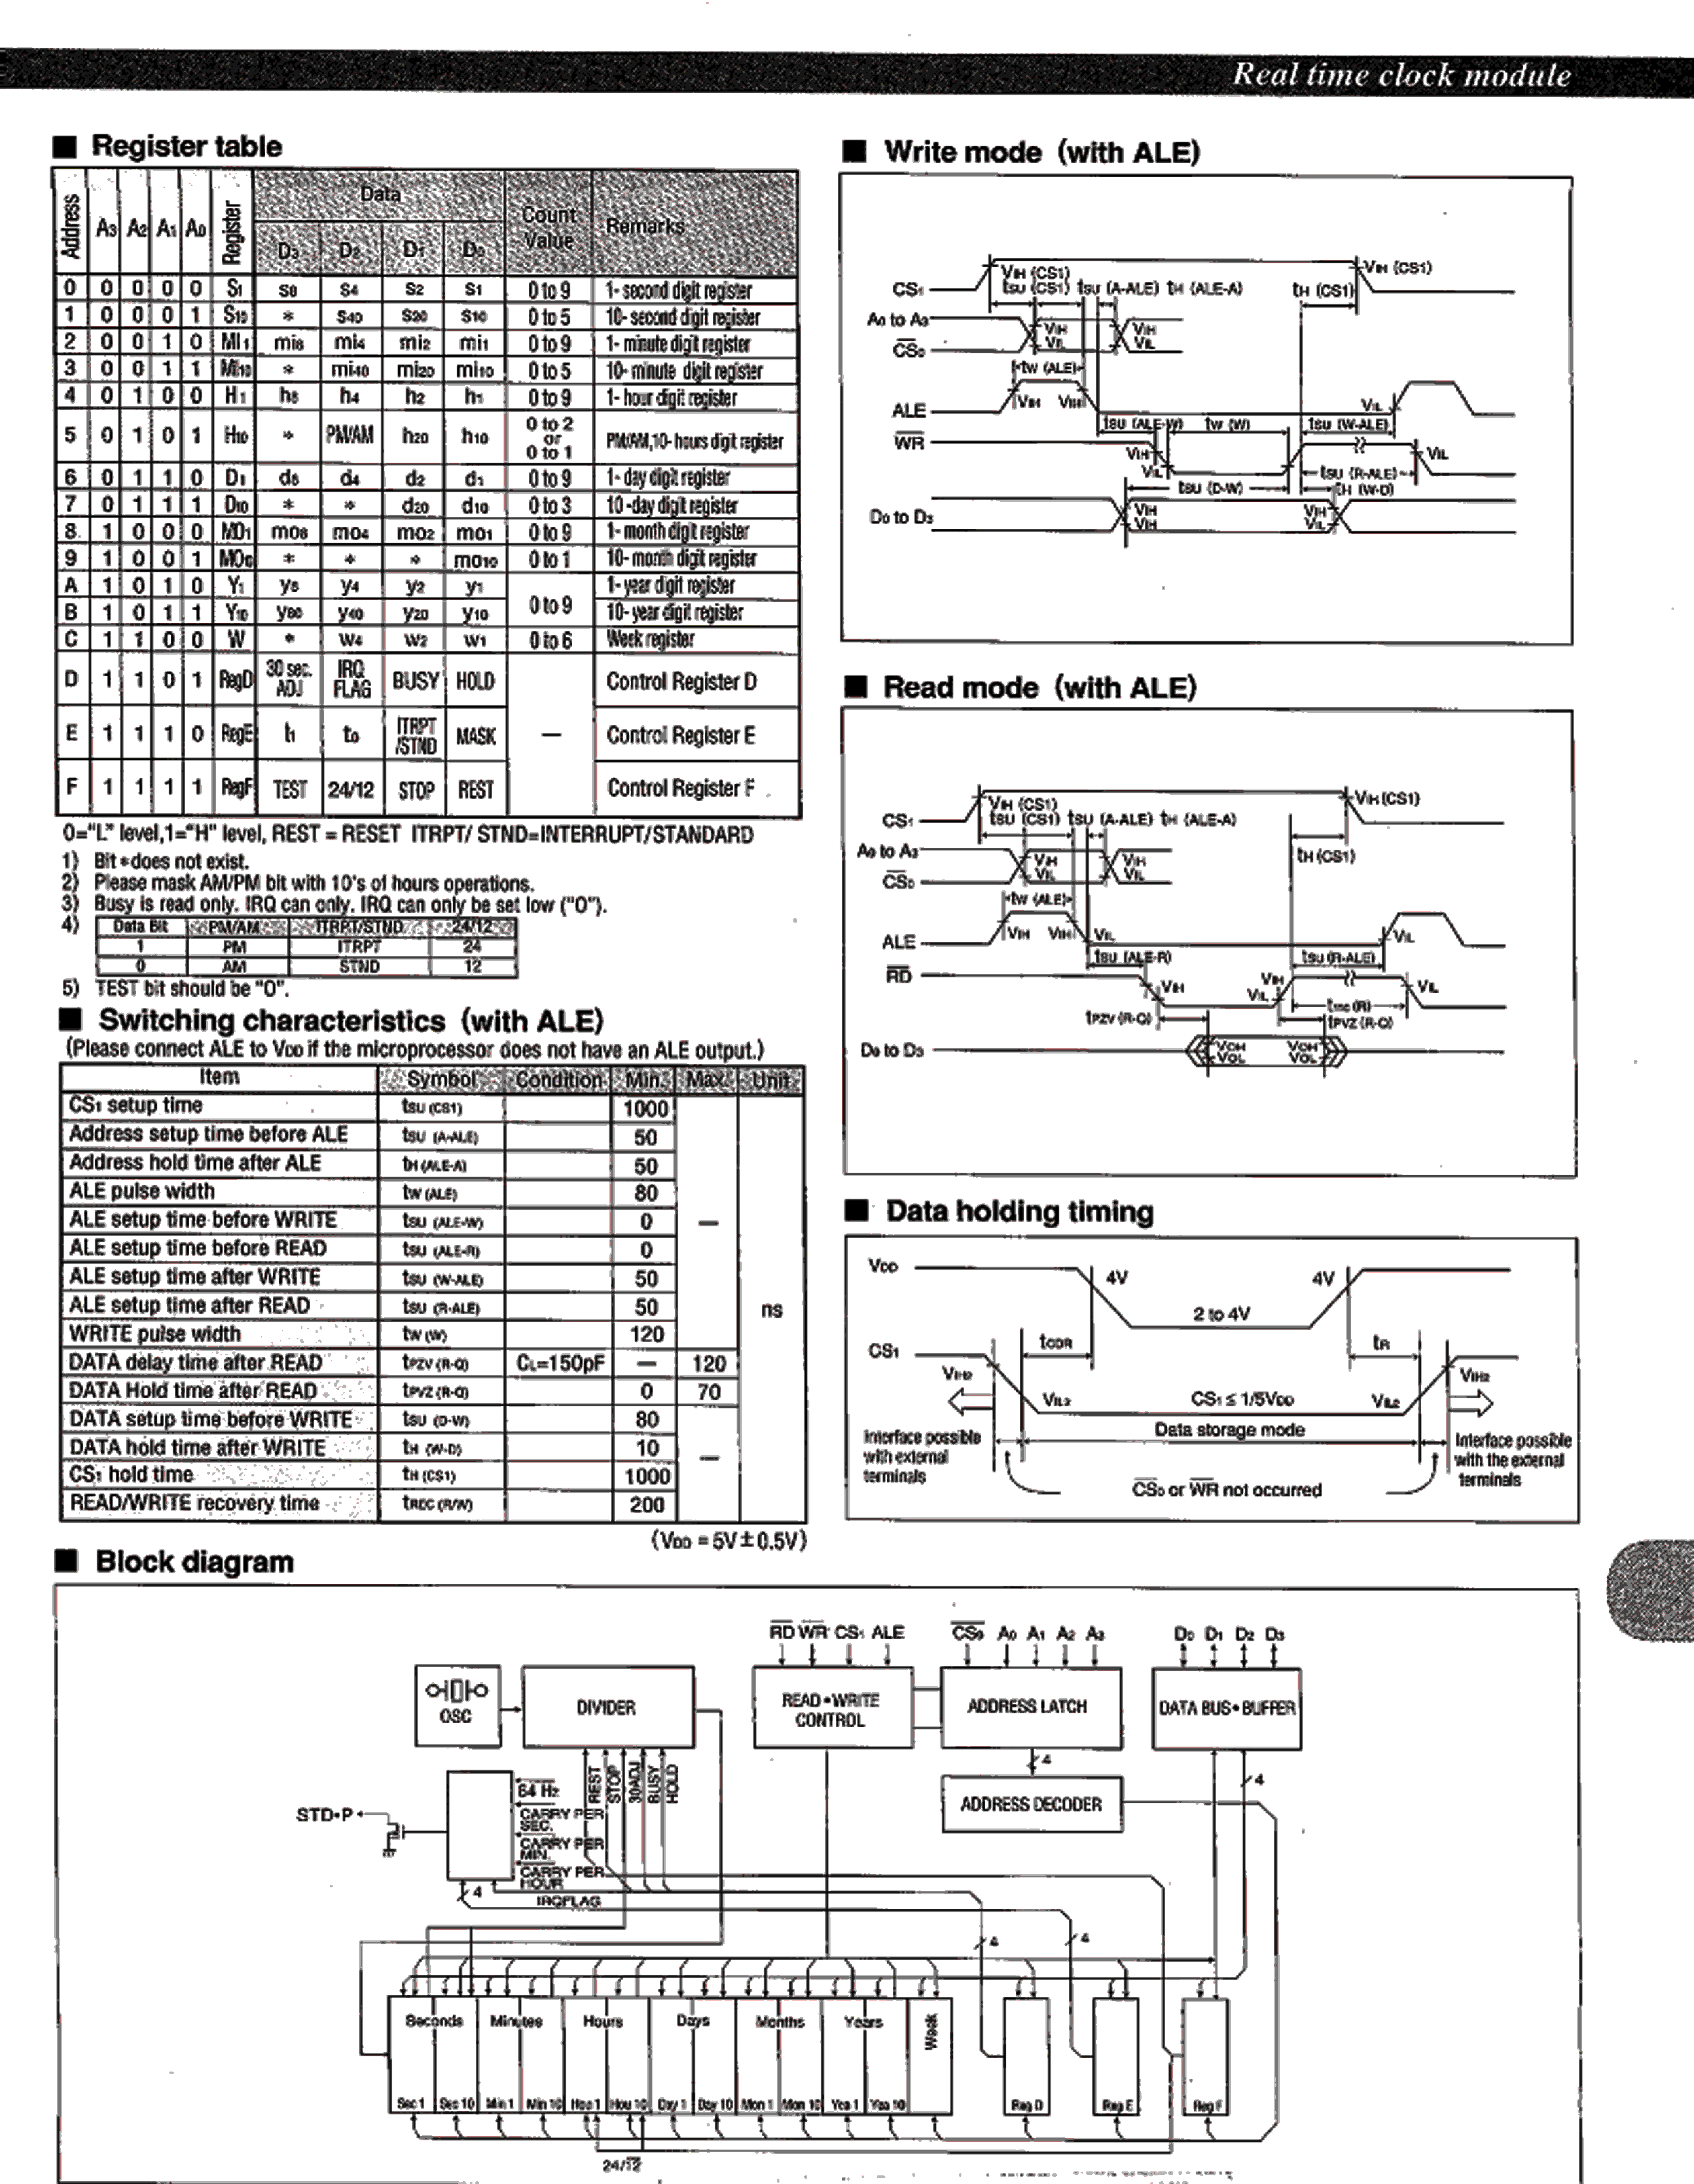 Даташит RTC-72423 - Real time clock module(4-bit REAL TIME CLOCK MODULE) страница 2